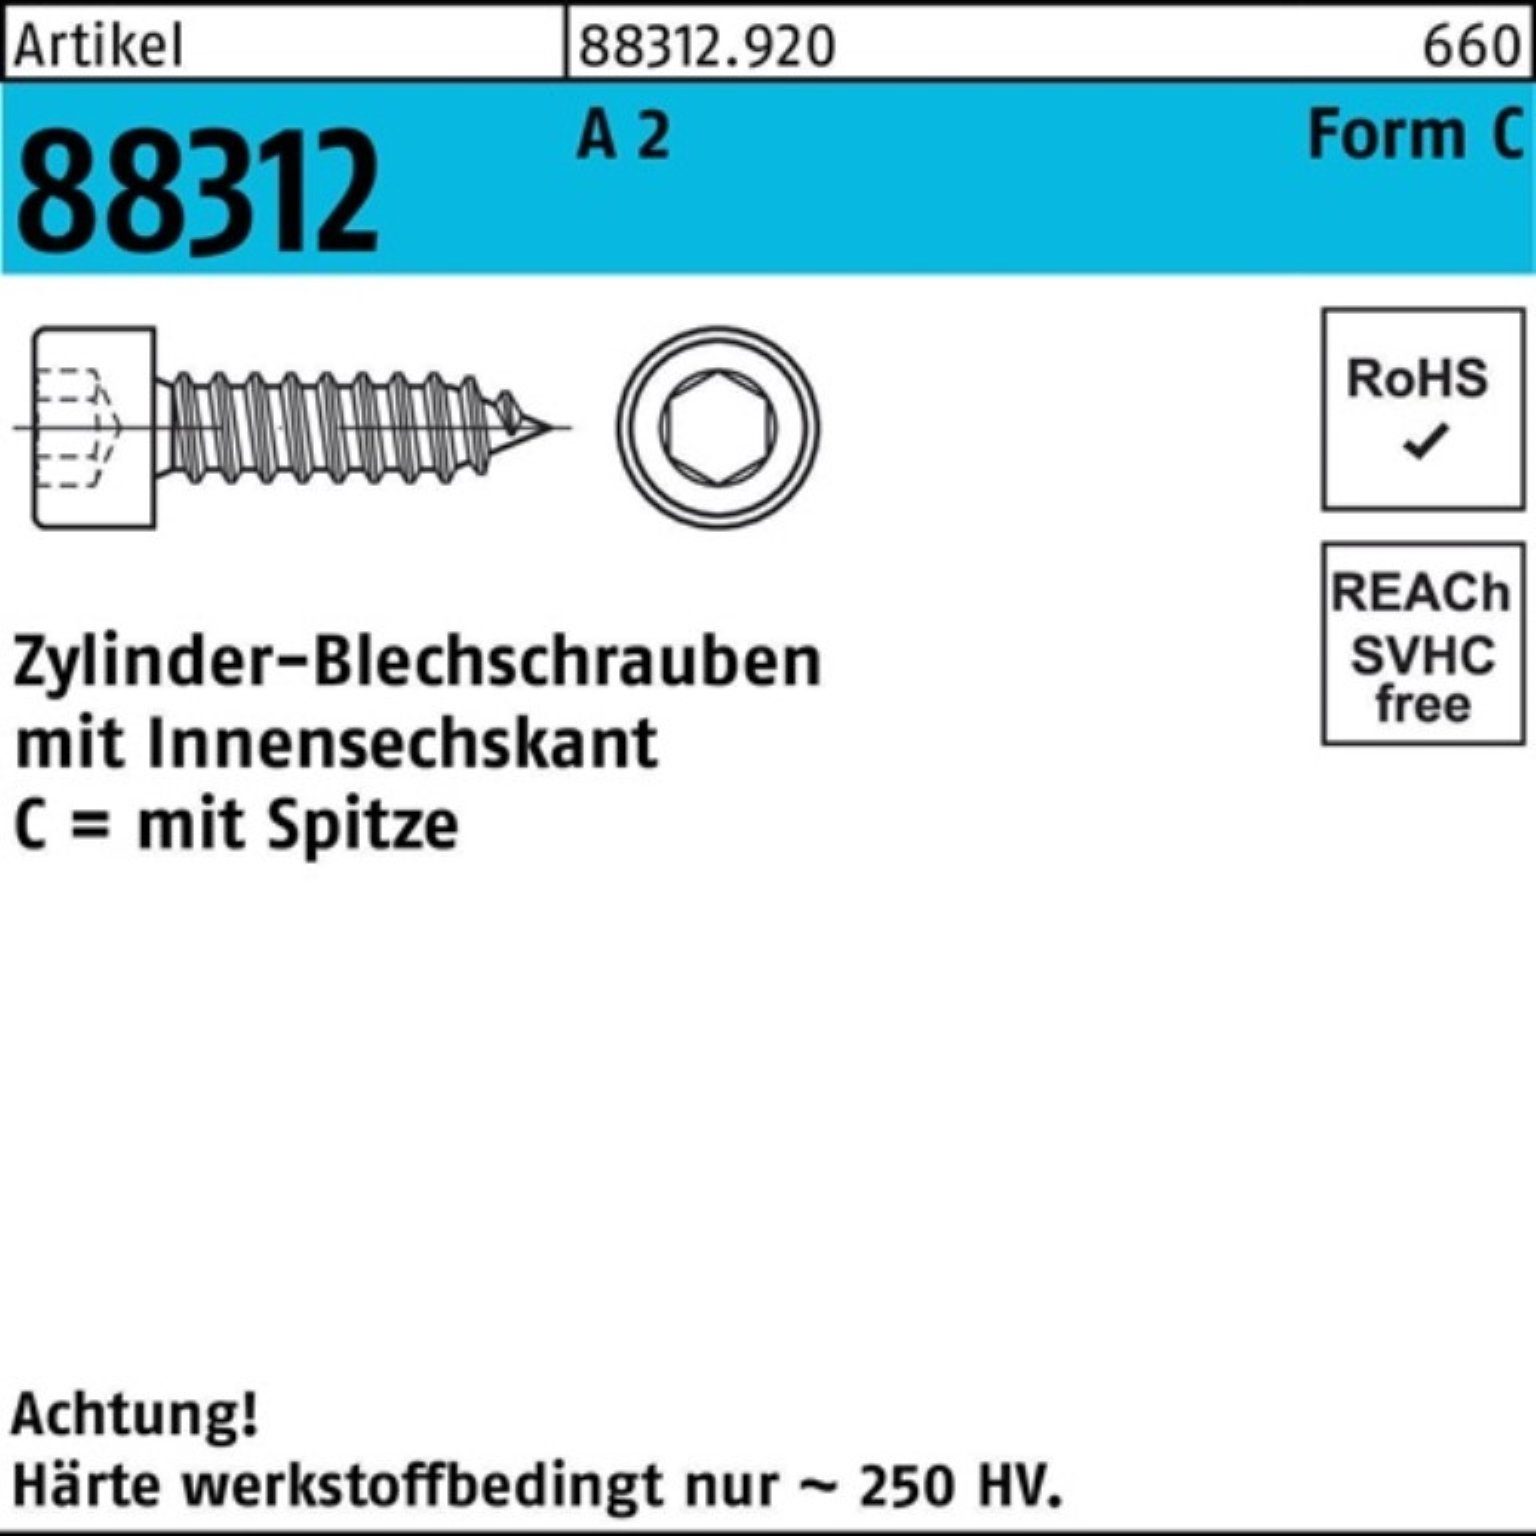 Reyher Blechschraube 1000er Pack Zylinderblechschraube R 88312 Spitze/Innen-6kt C 4,8x 19 A